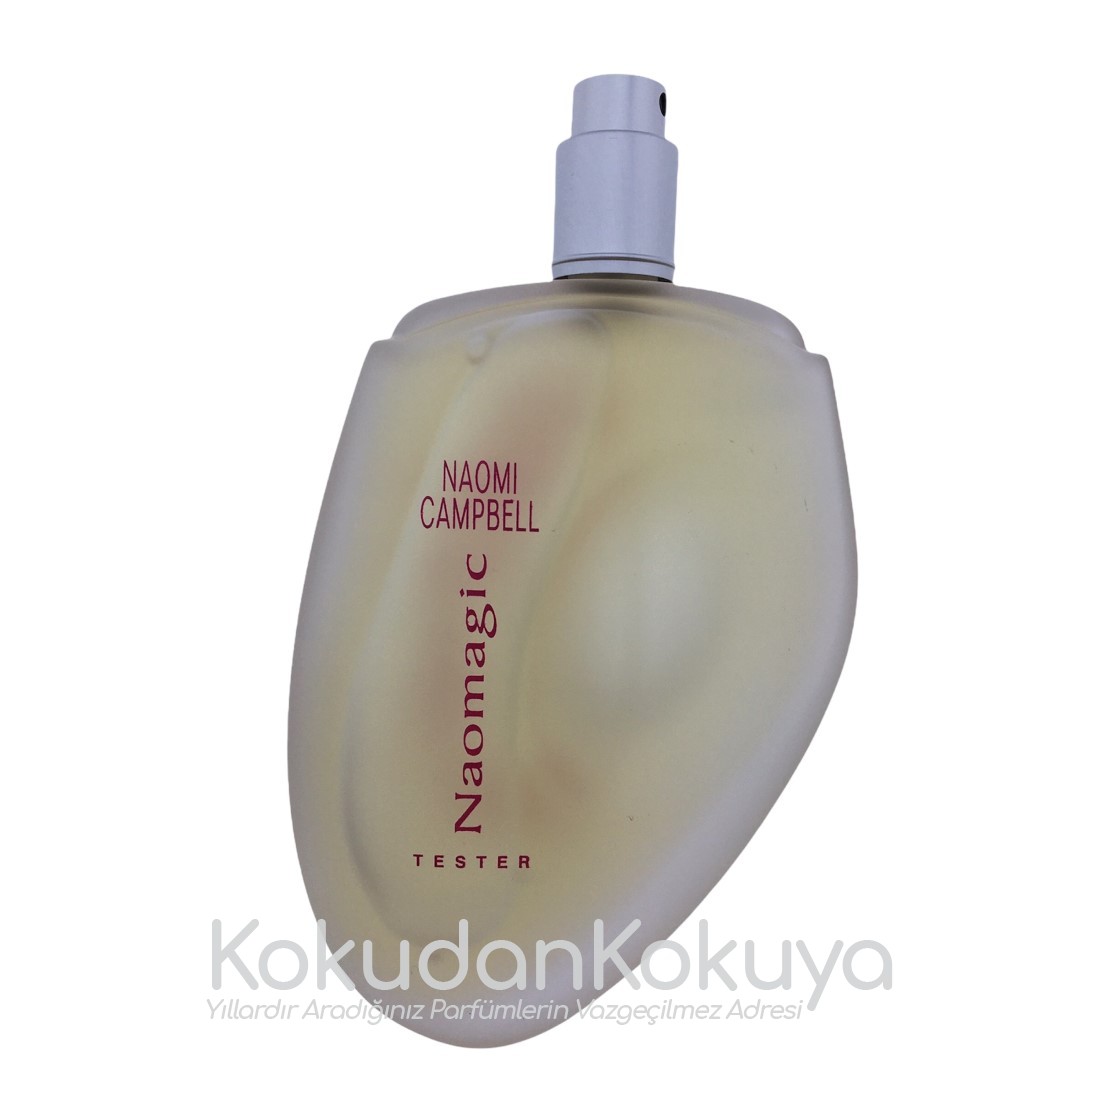 NAOMI CAMPBELL Naomagic (Vintage) Parfüm Kadın 100ml Eau De Toilette (EDT) Sprey 